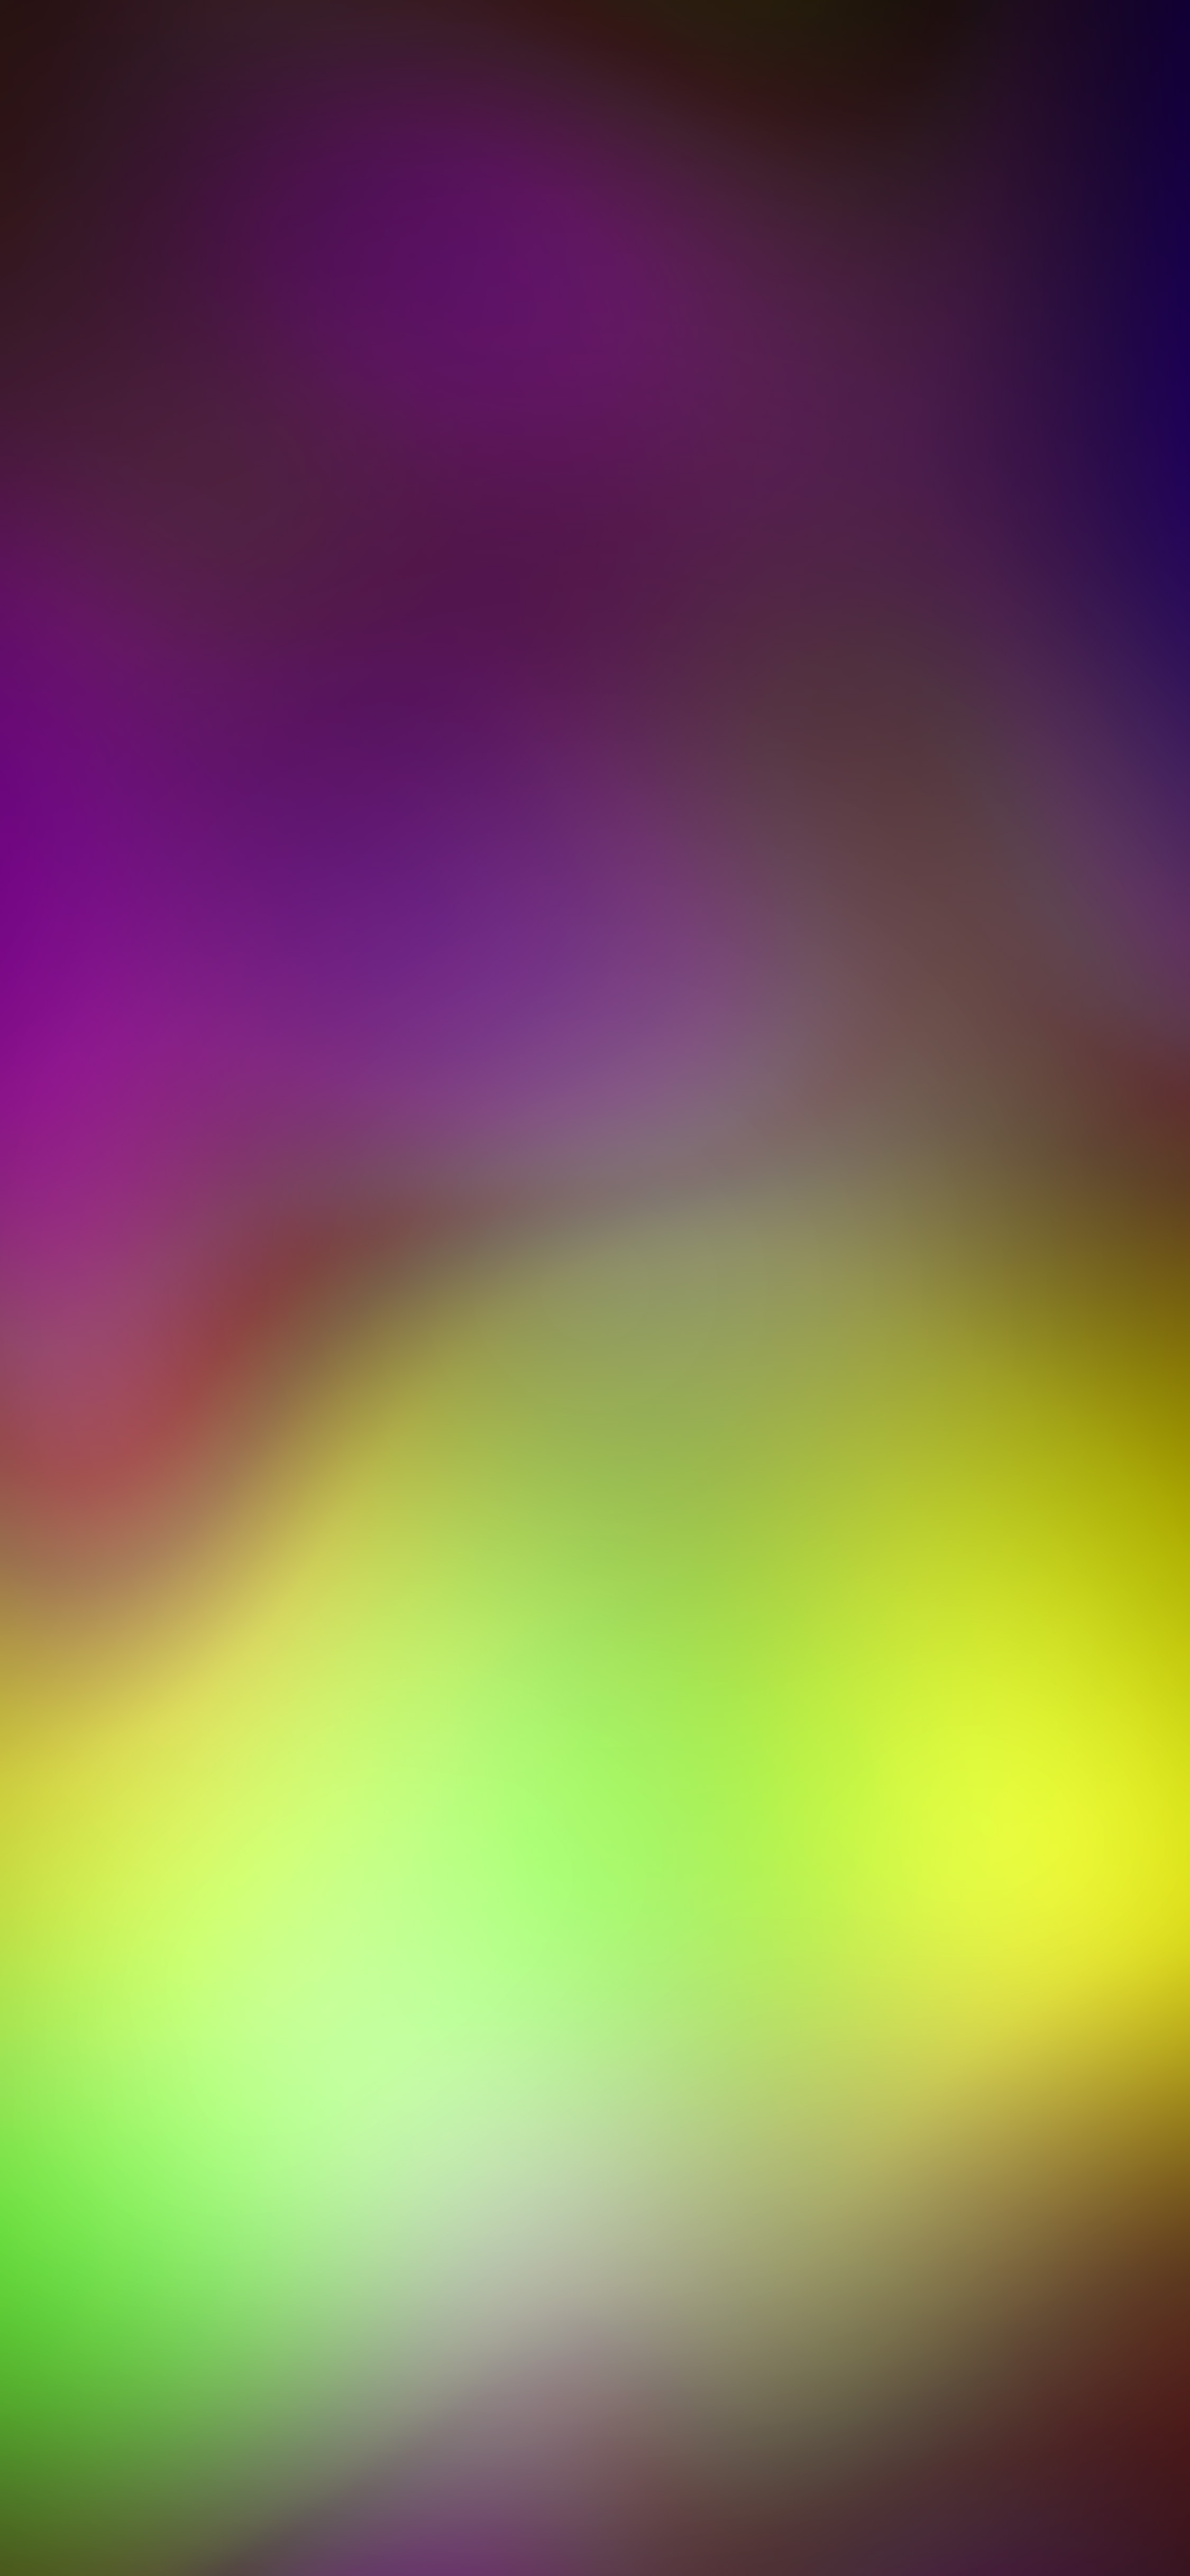 General 2250x4872 iPod iPhone iPad iOS colorful portrait display